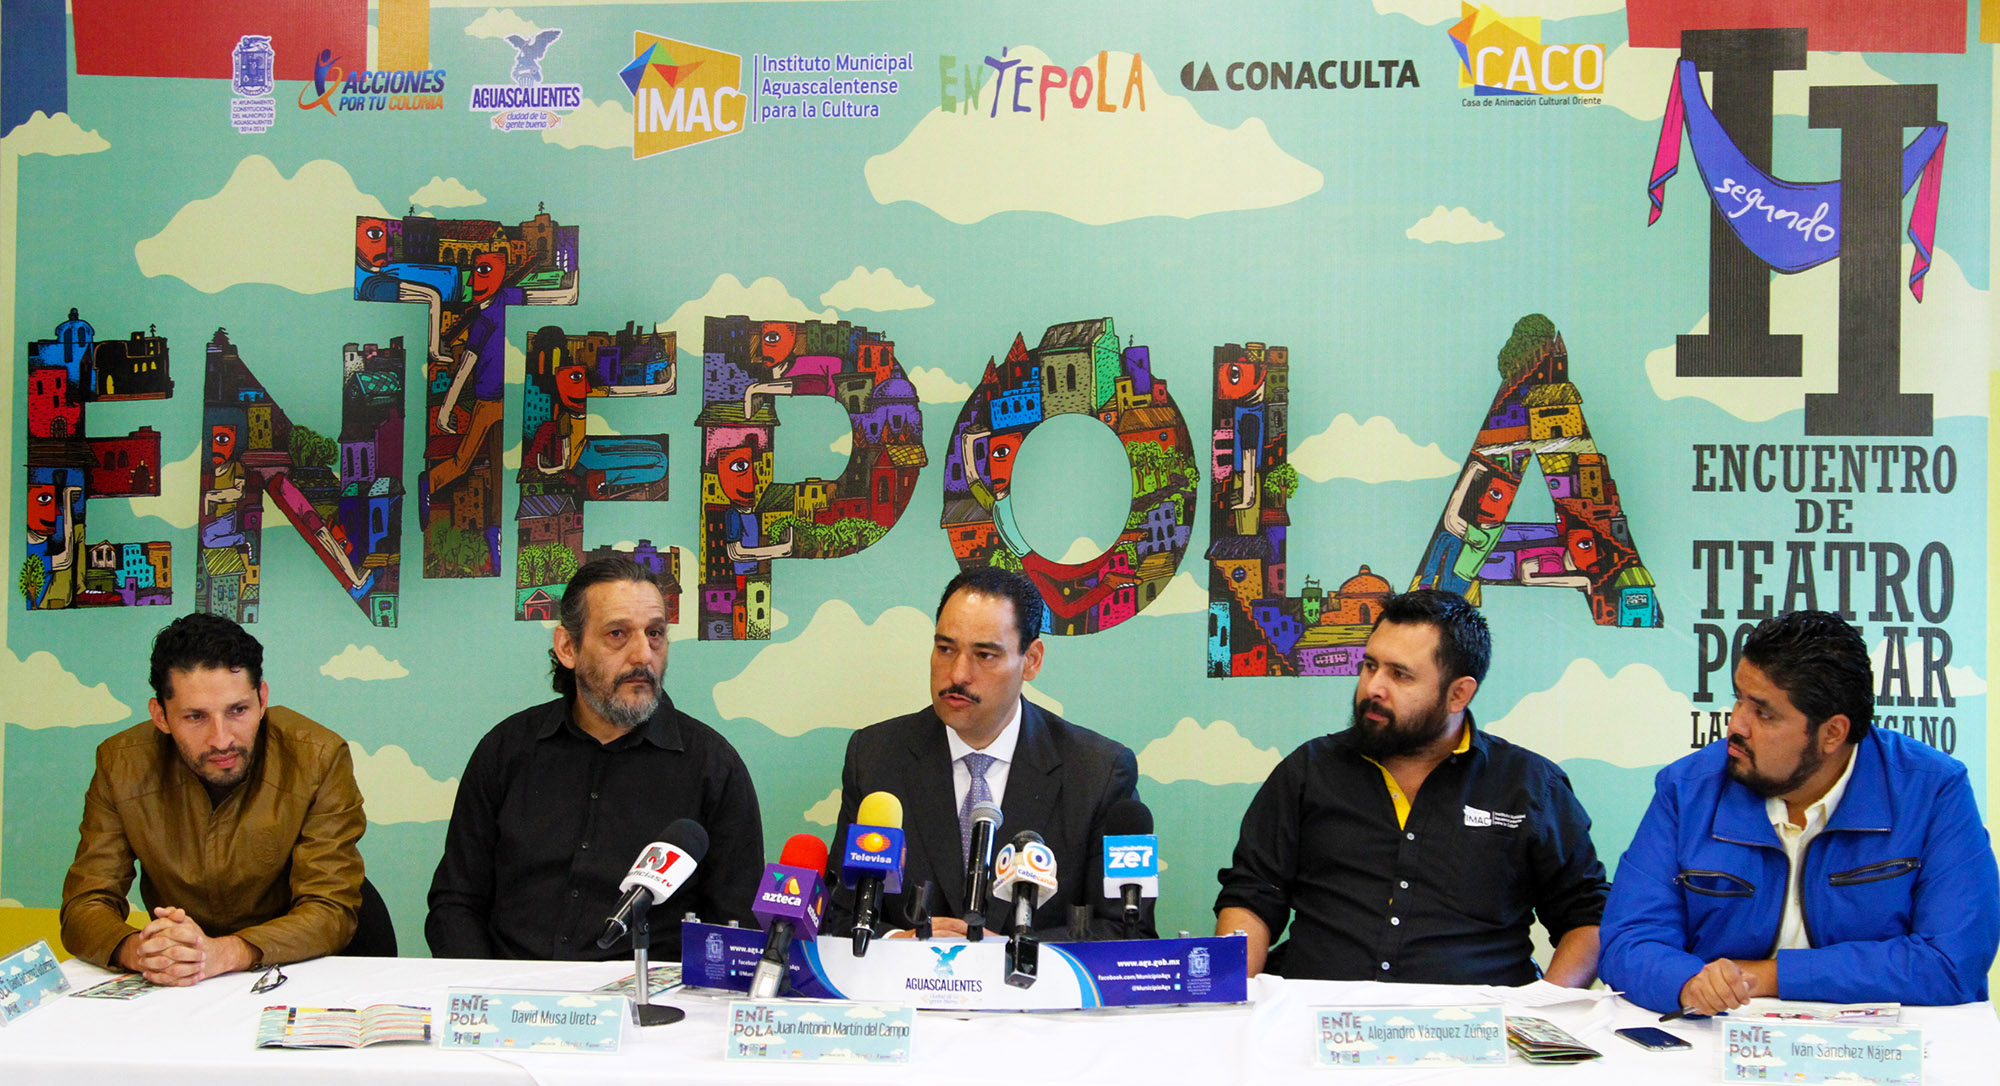 David Gutiérrez (IMAC), David Musa (Entepola Chile), Juan Antonio Martín (Alcalde Aguascalientes), Alejandro Vázquez (IMAC) e Iván Sánchez (Comisión Permanente de Cultura).